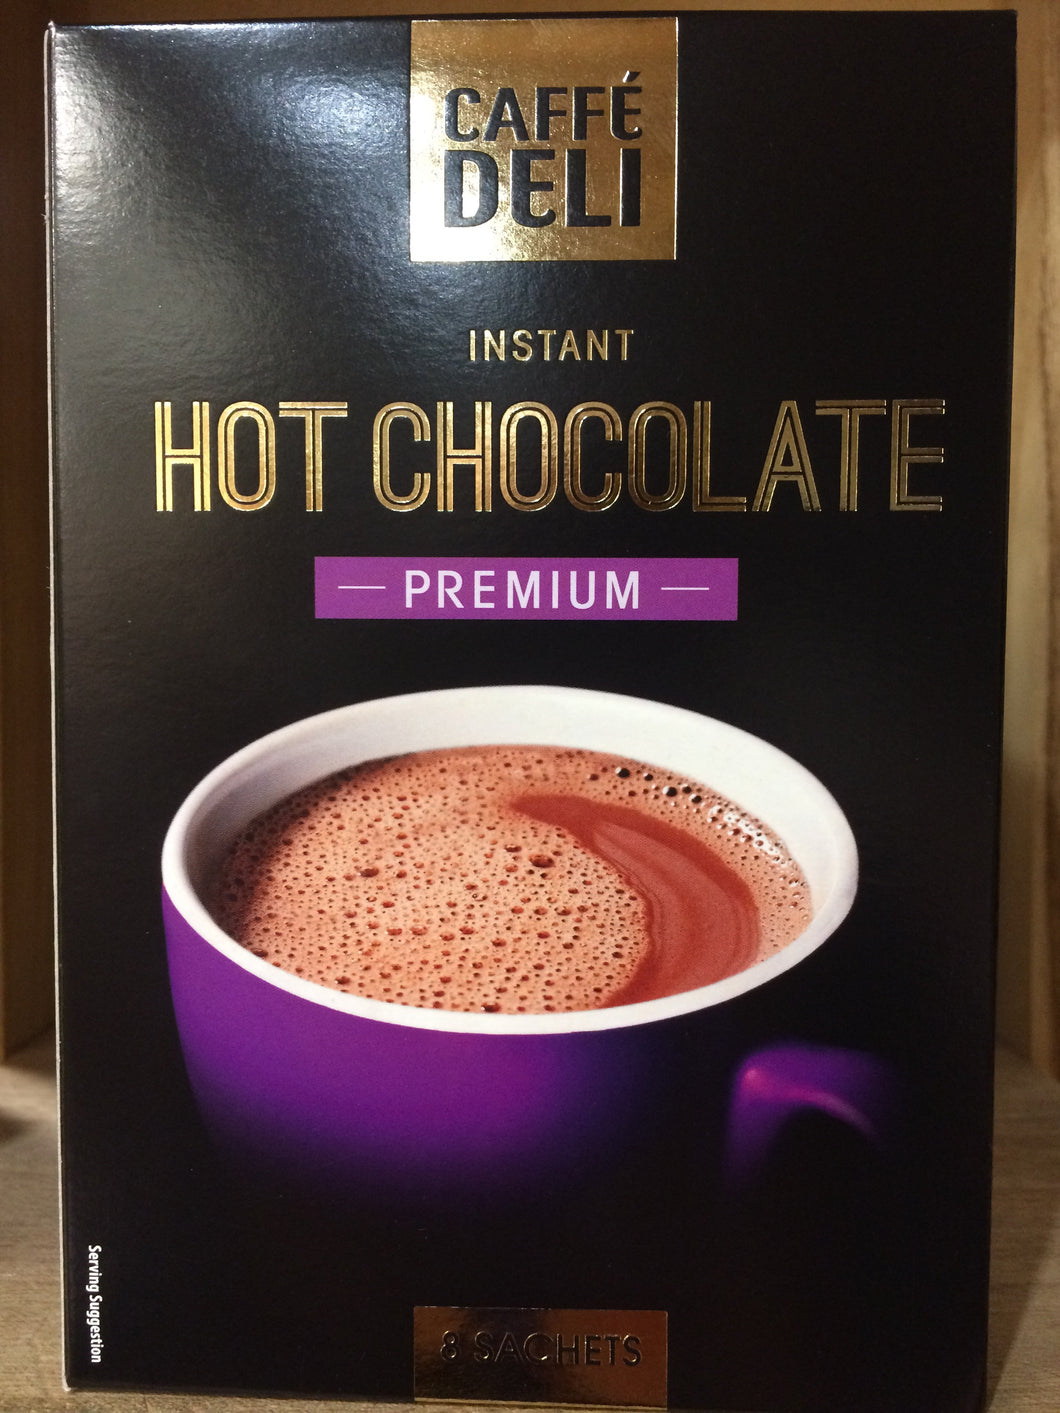 Caffe Deli Instant Hot Chocolate Premium 8 Sachets 200g